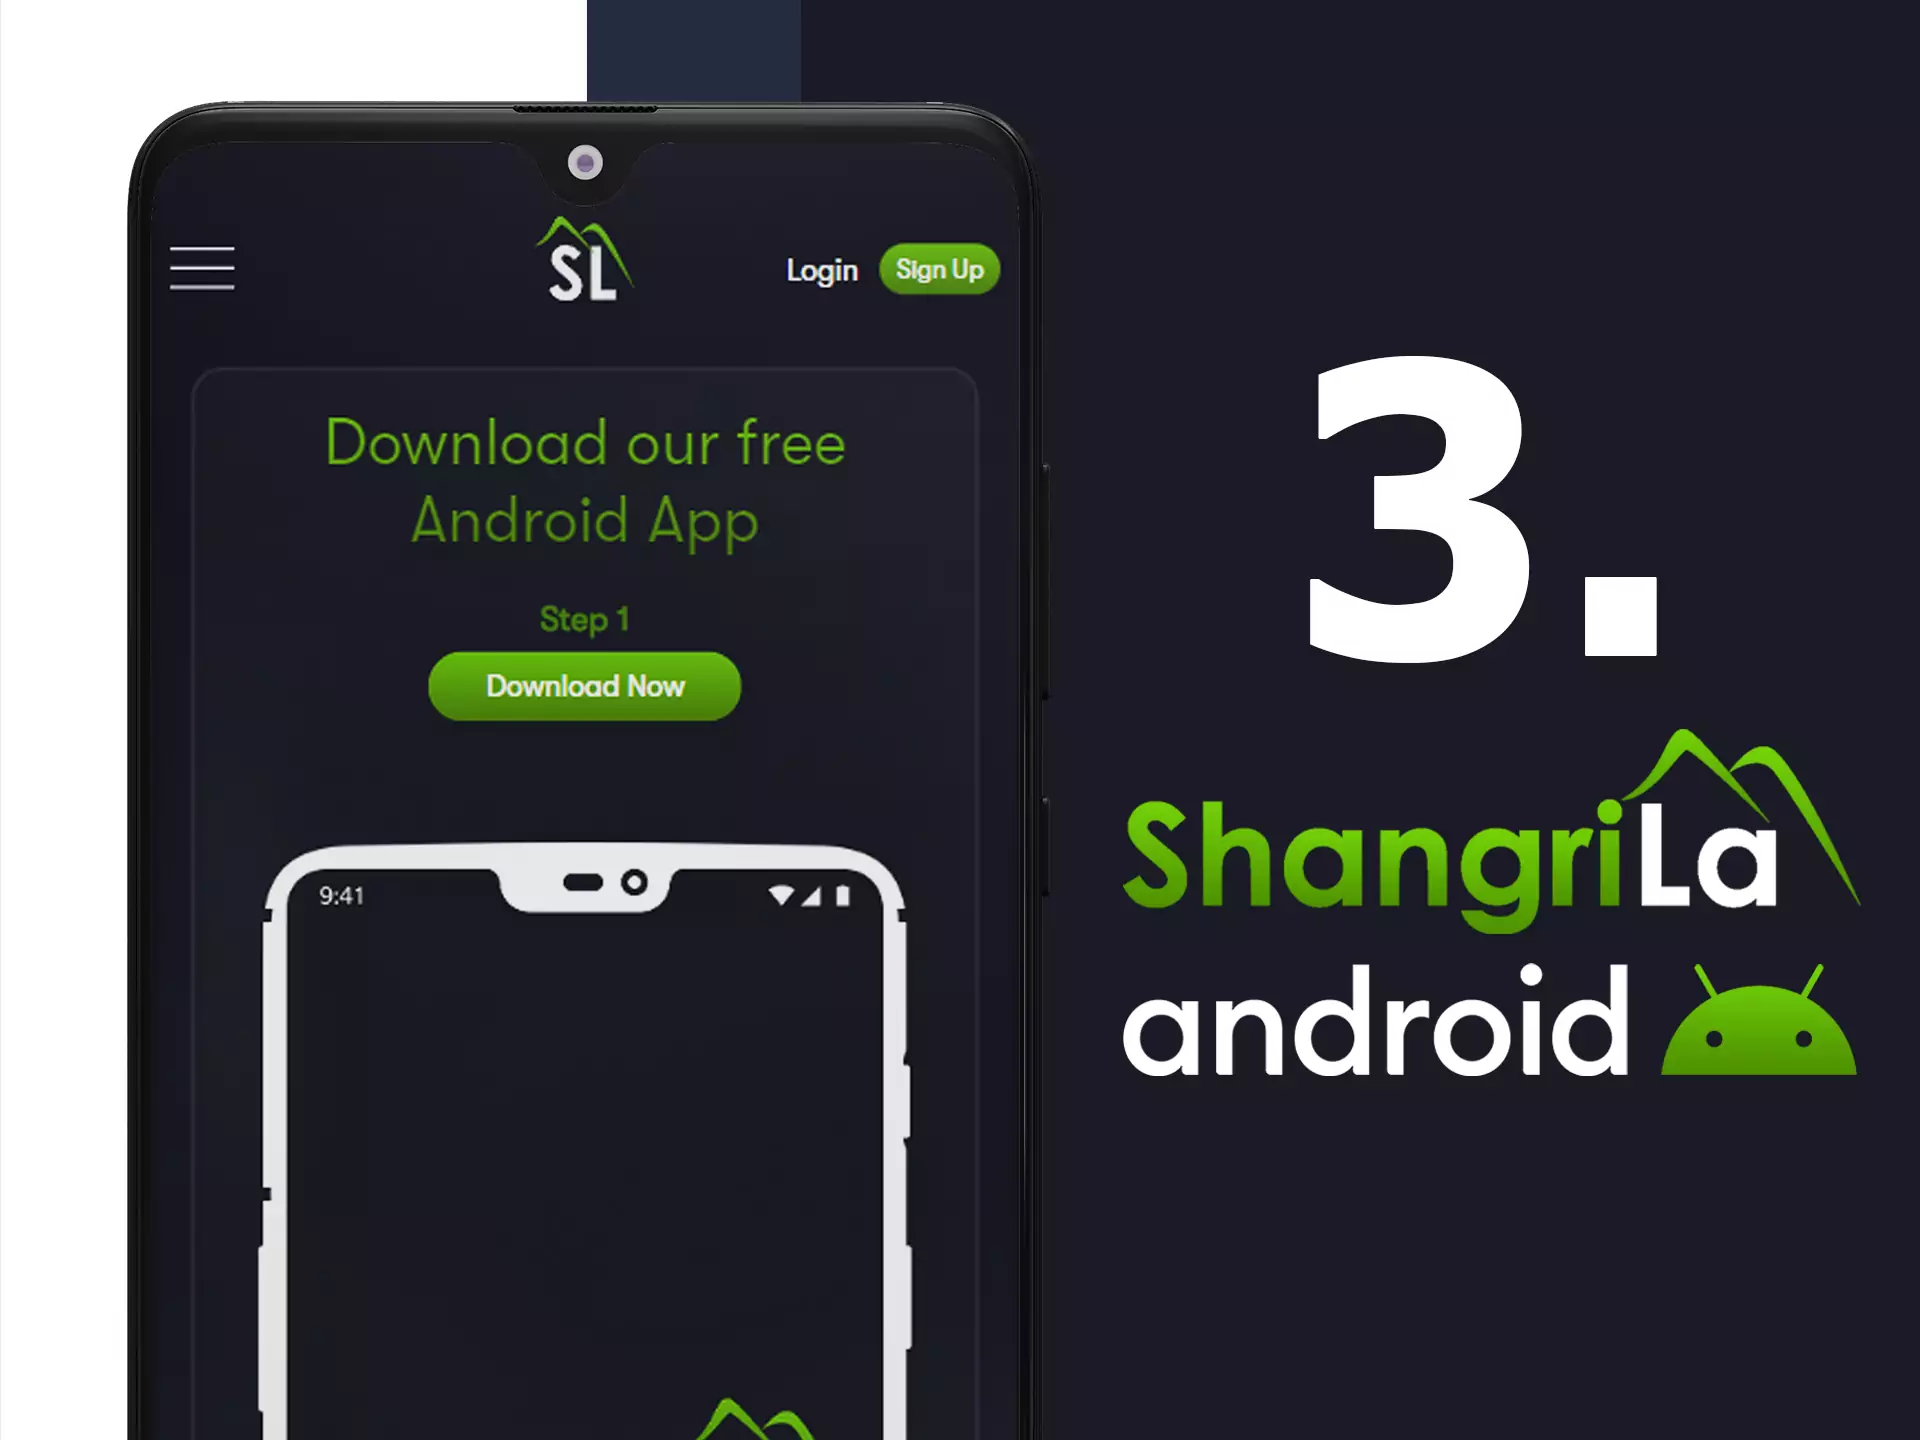 Enter the app download page of the Shangri La website.